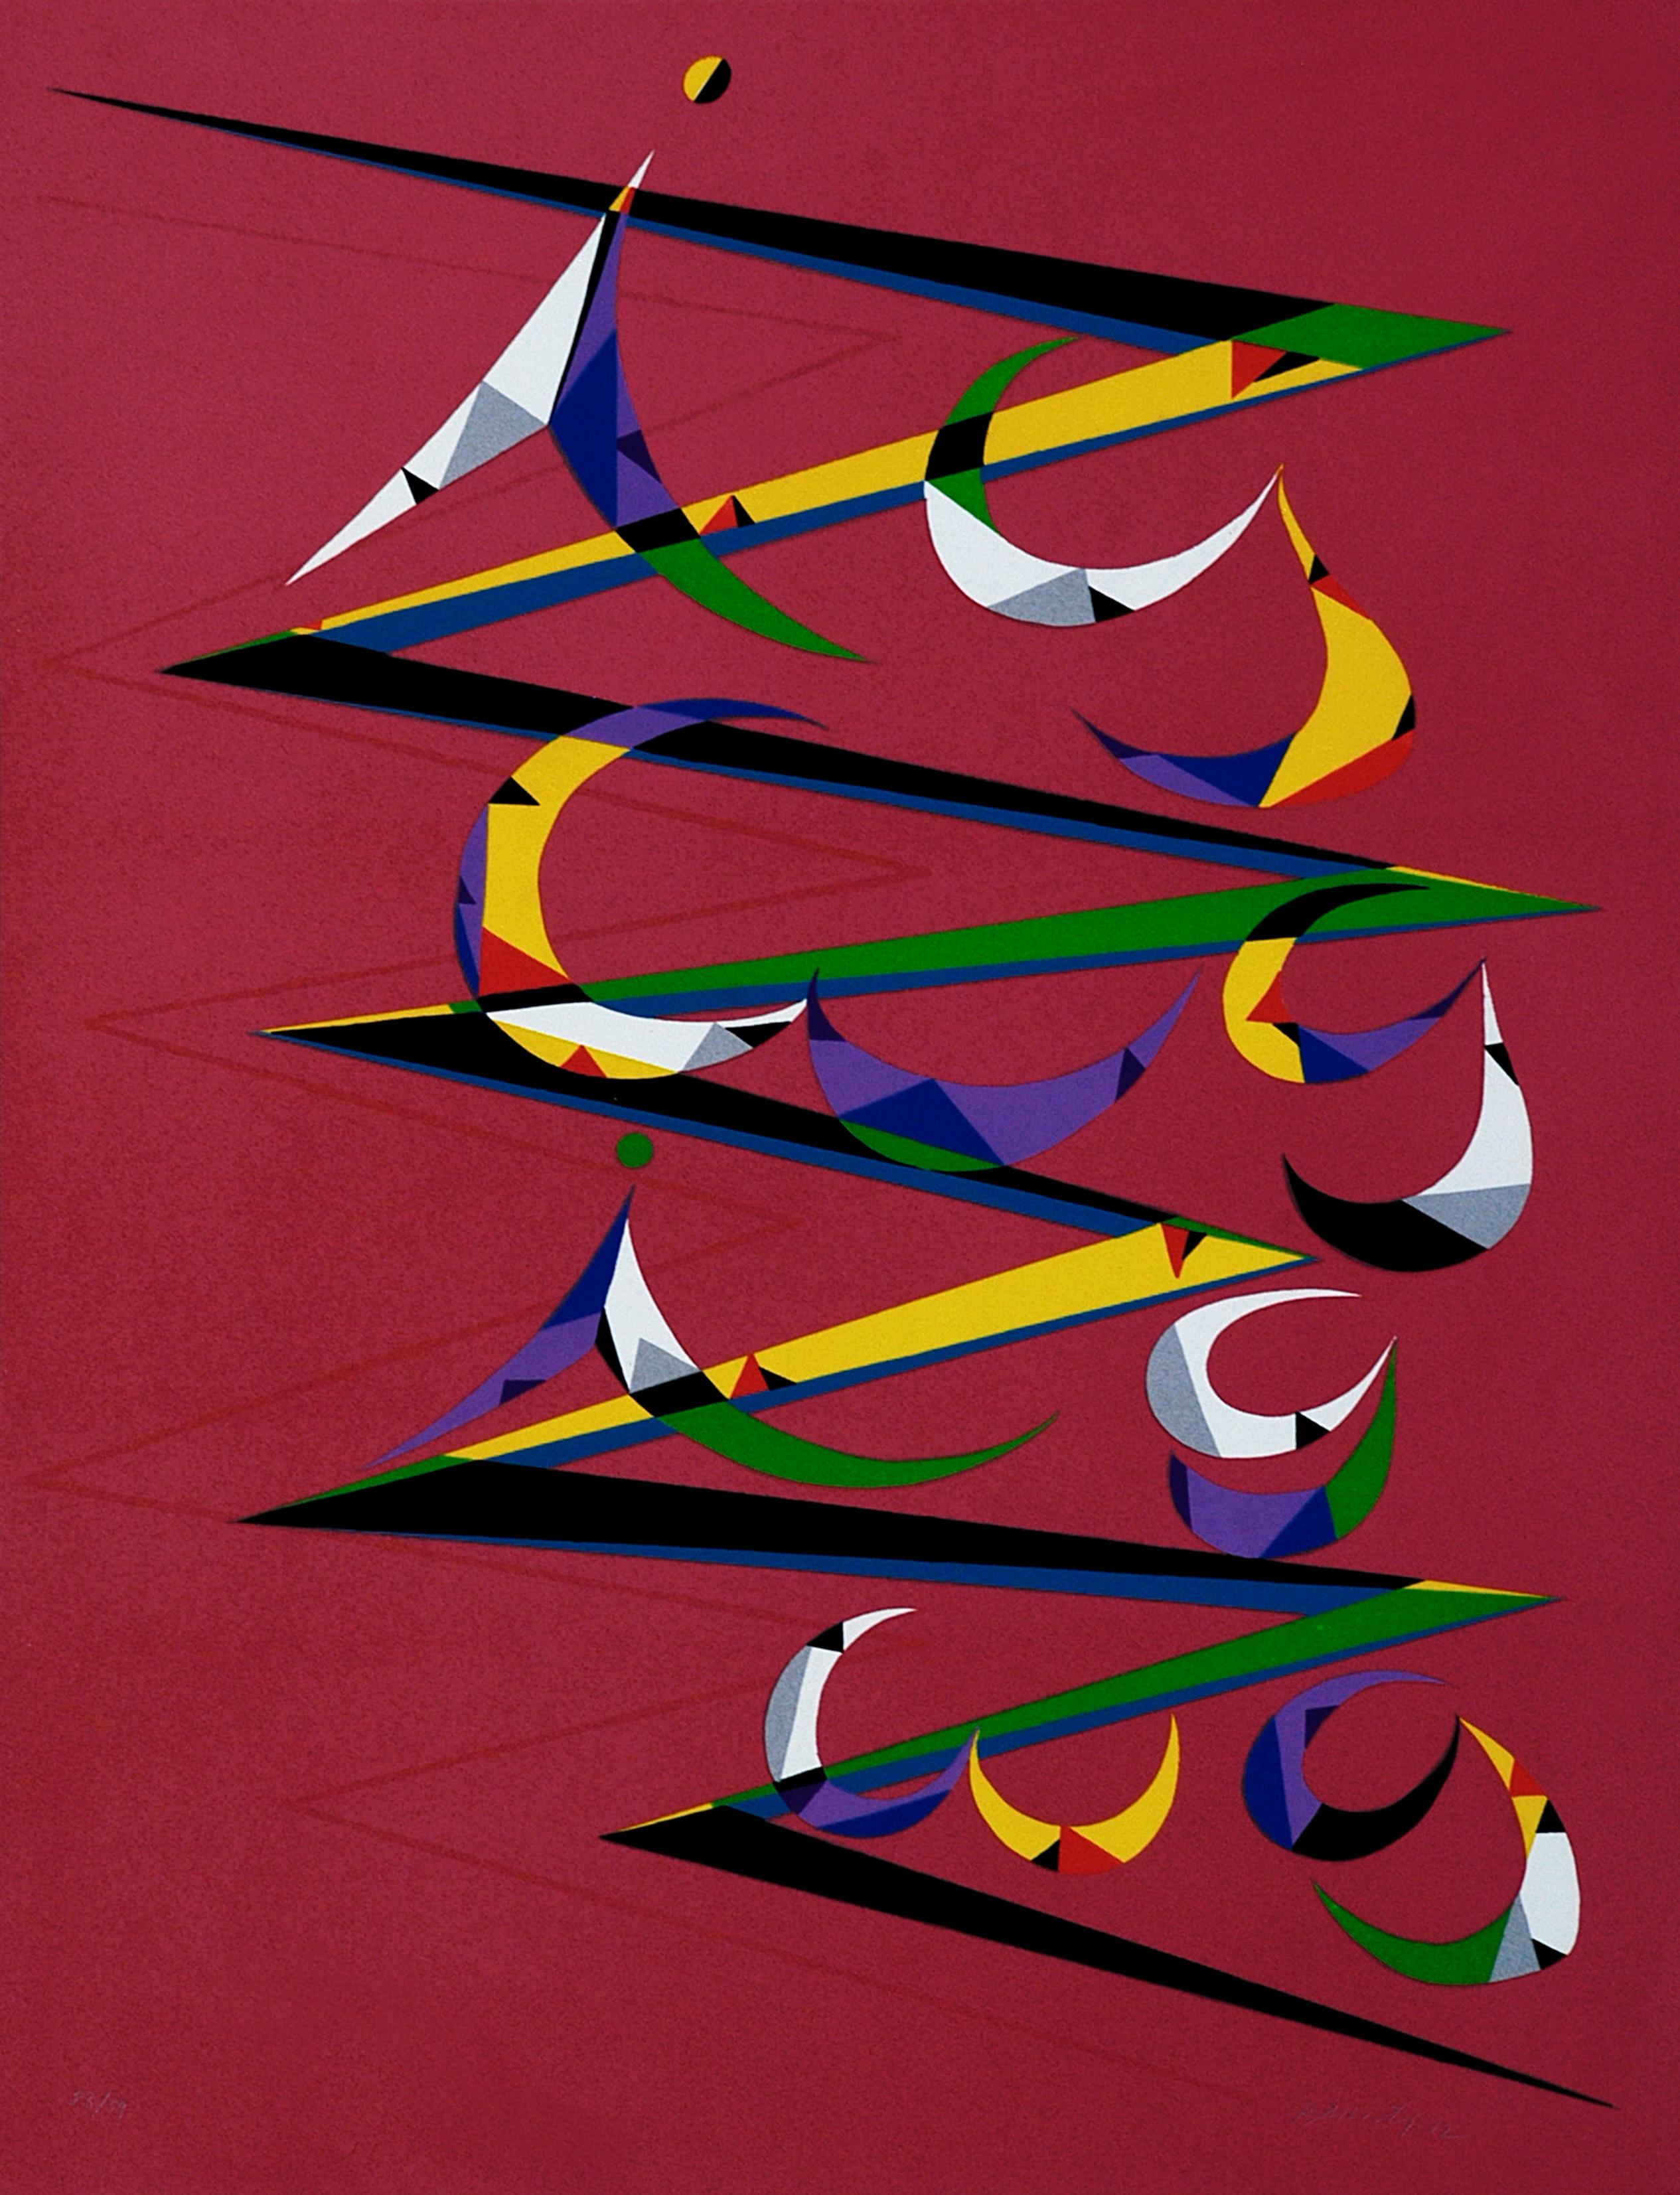 Rafael Alberti Abstract Print - Letter Z - Original Lithograph by Raphael Alberti - 1972